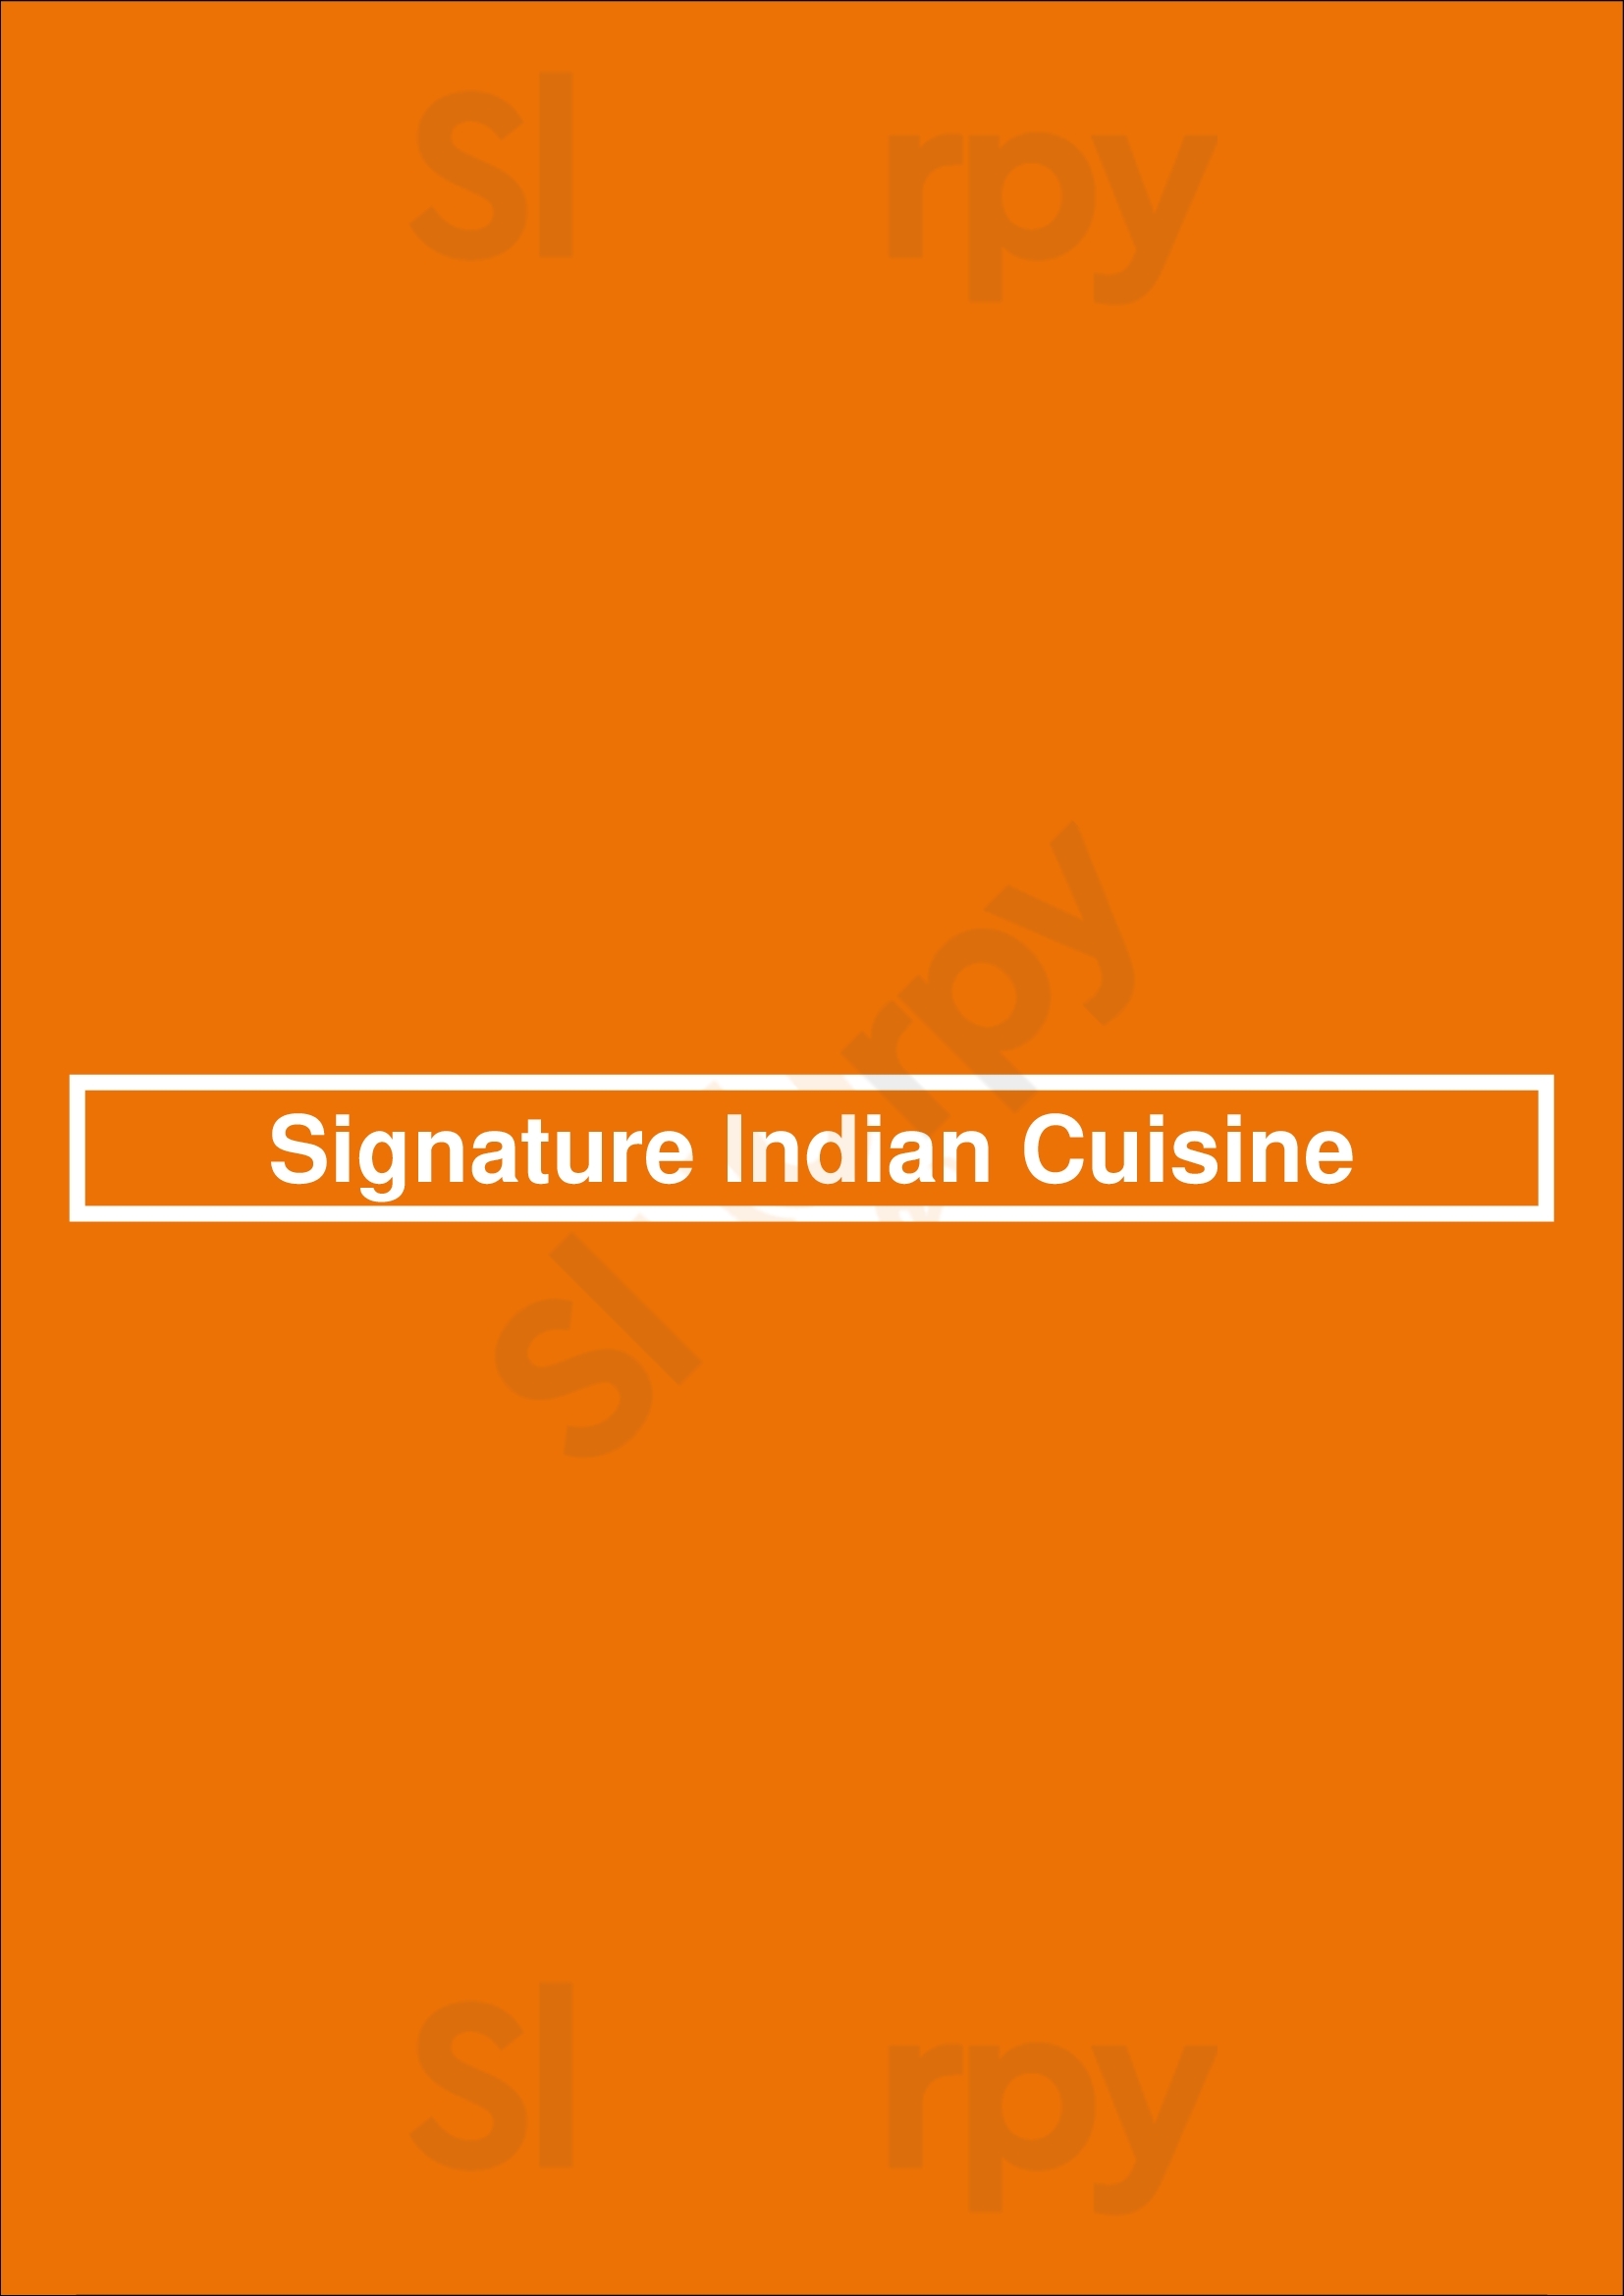 Signature Indian Cuisine Whitby Menu - 1